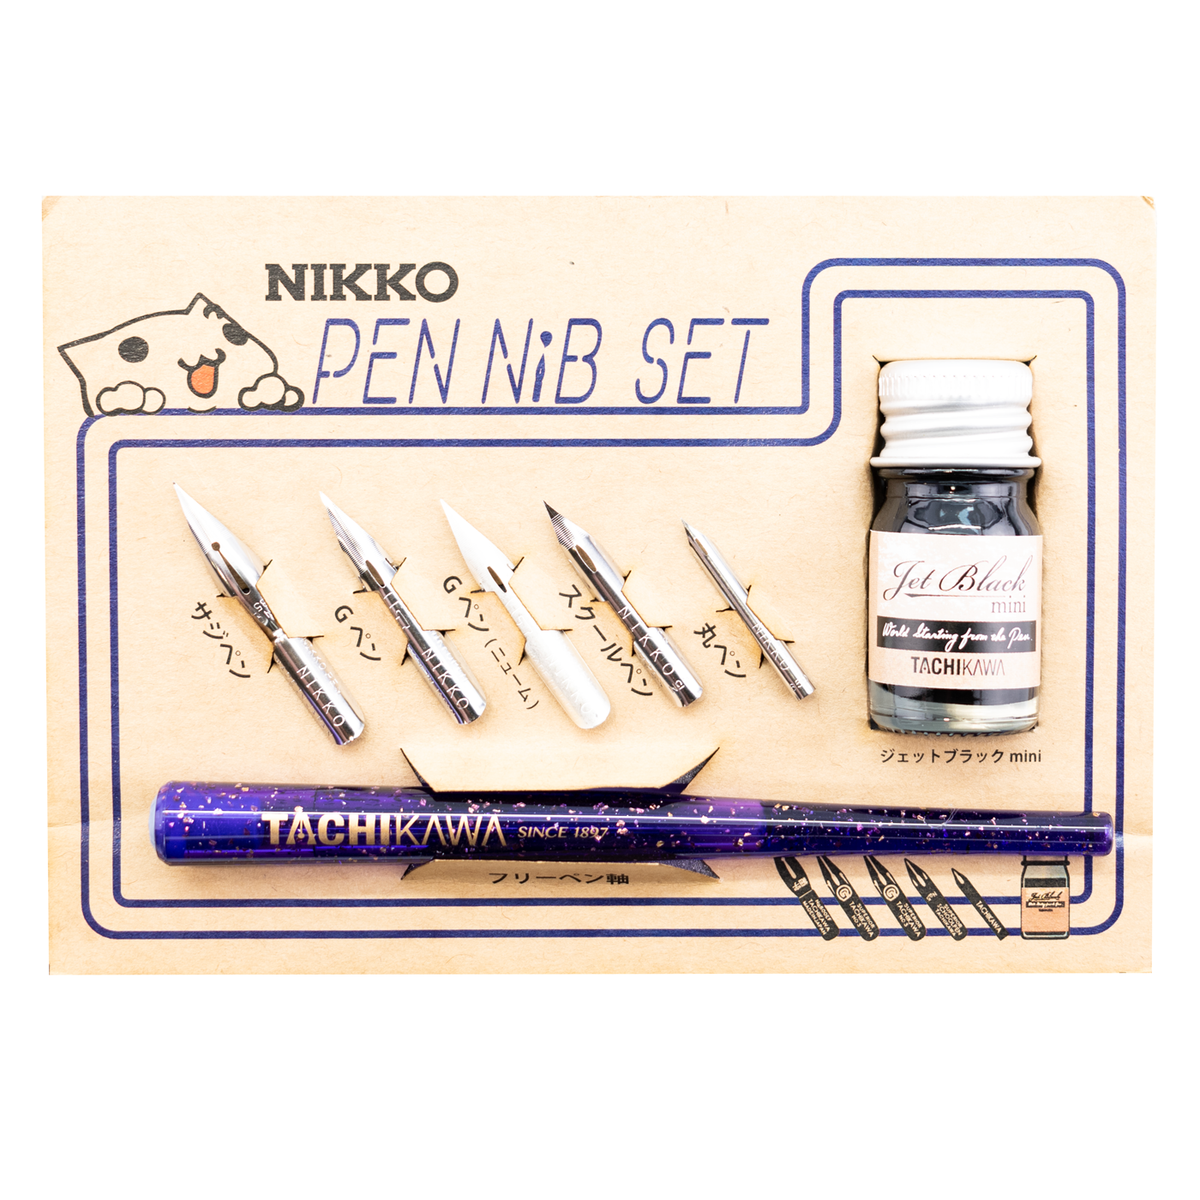 Tachikawa Nikko Manga Pen Nib Set